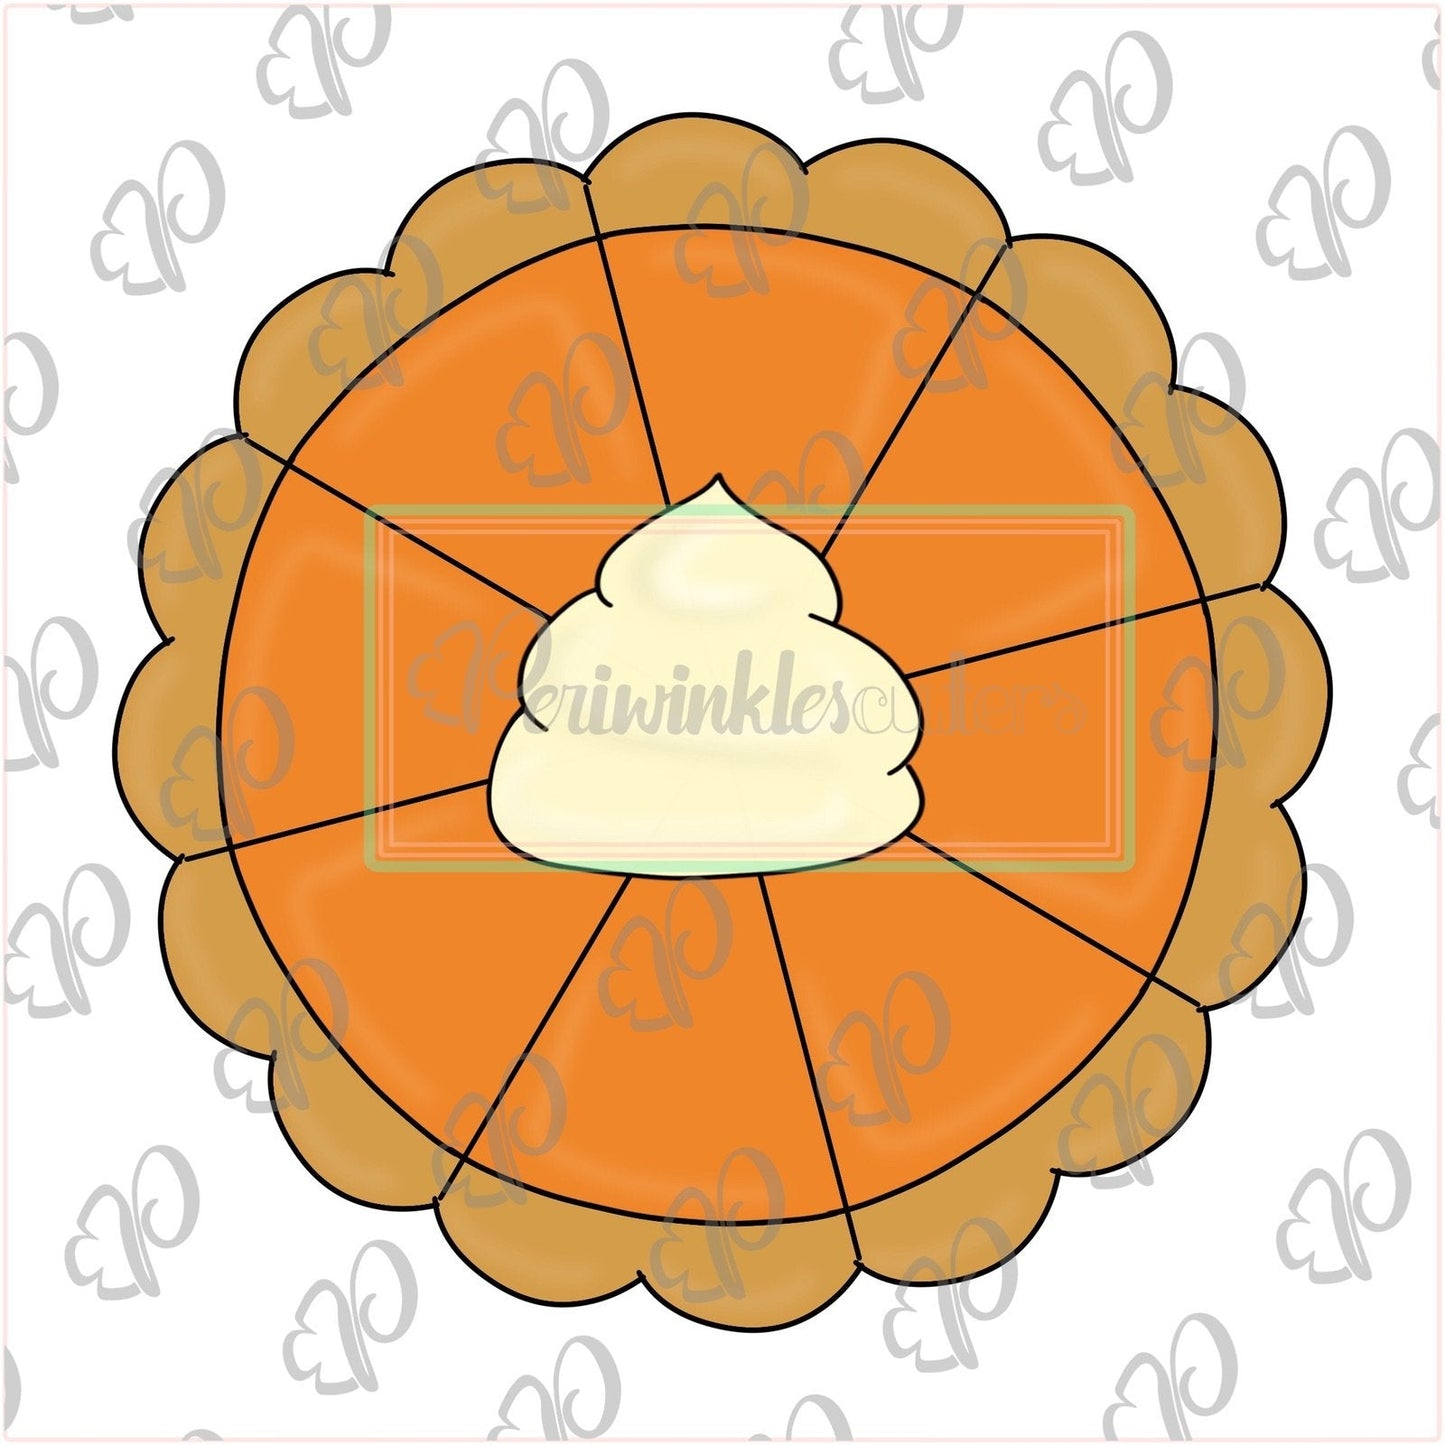 Pumpkin Pie Platter Cookie Cutter - Periwinkles Cutters